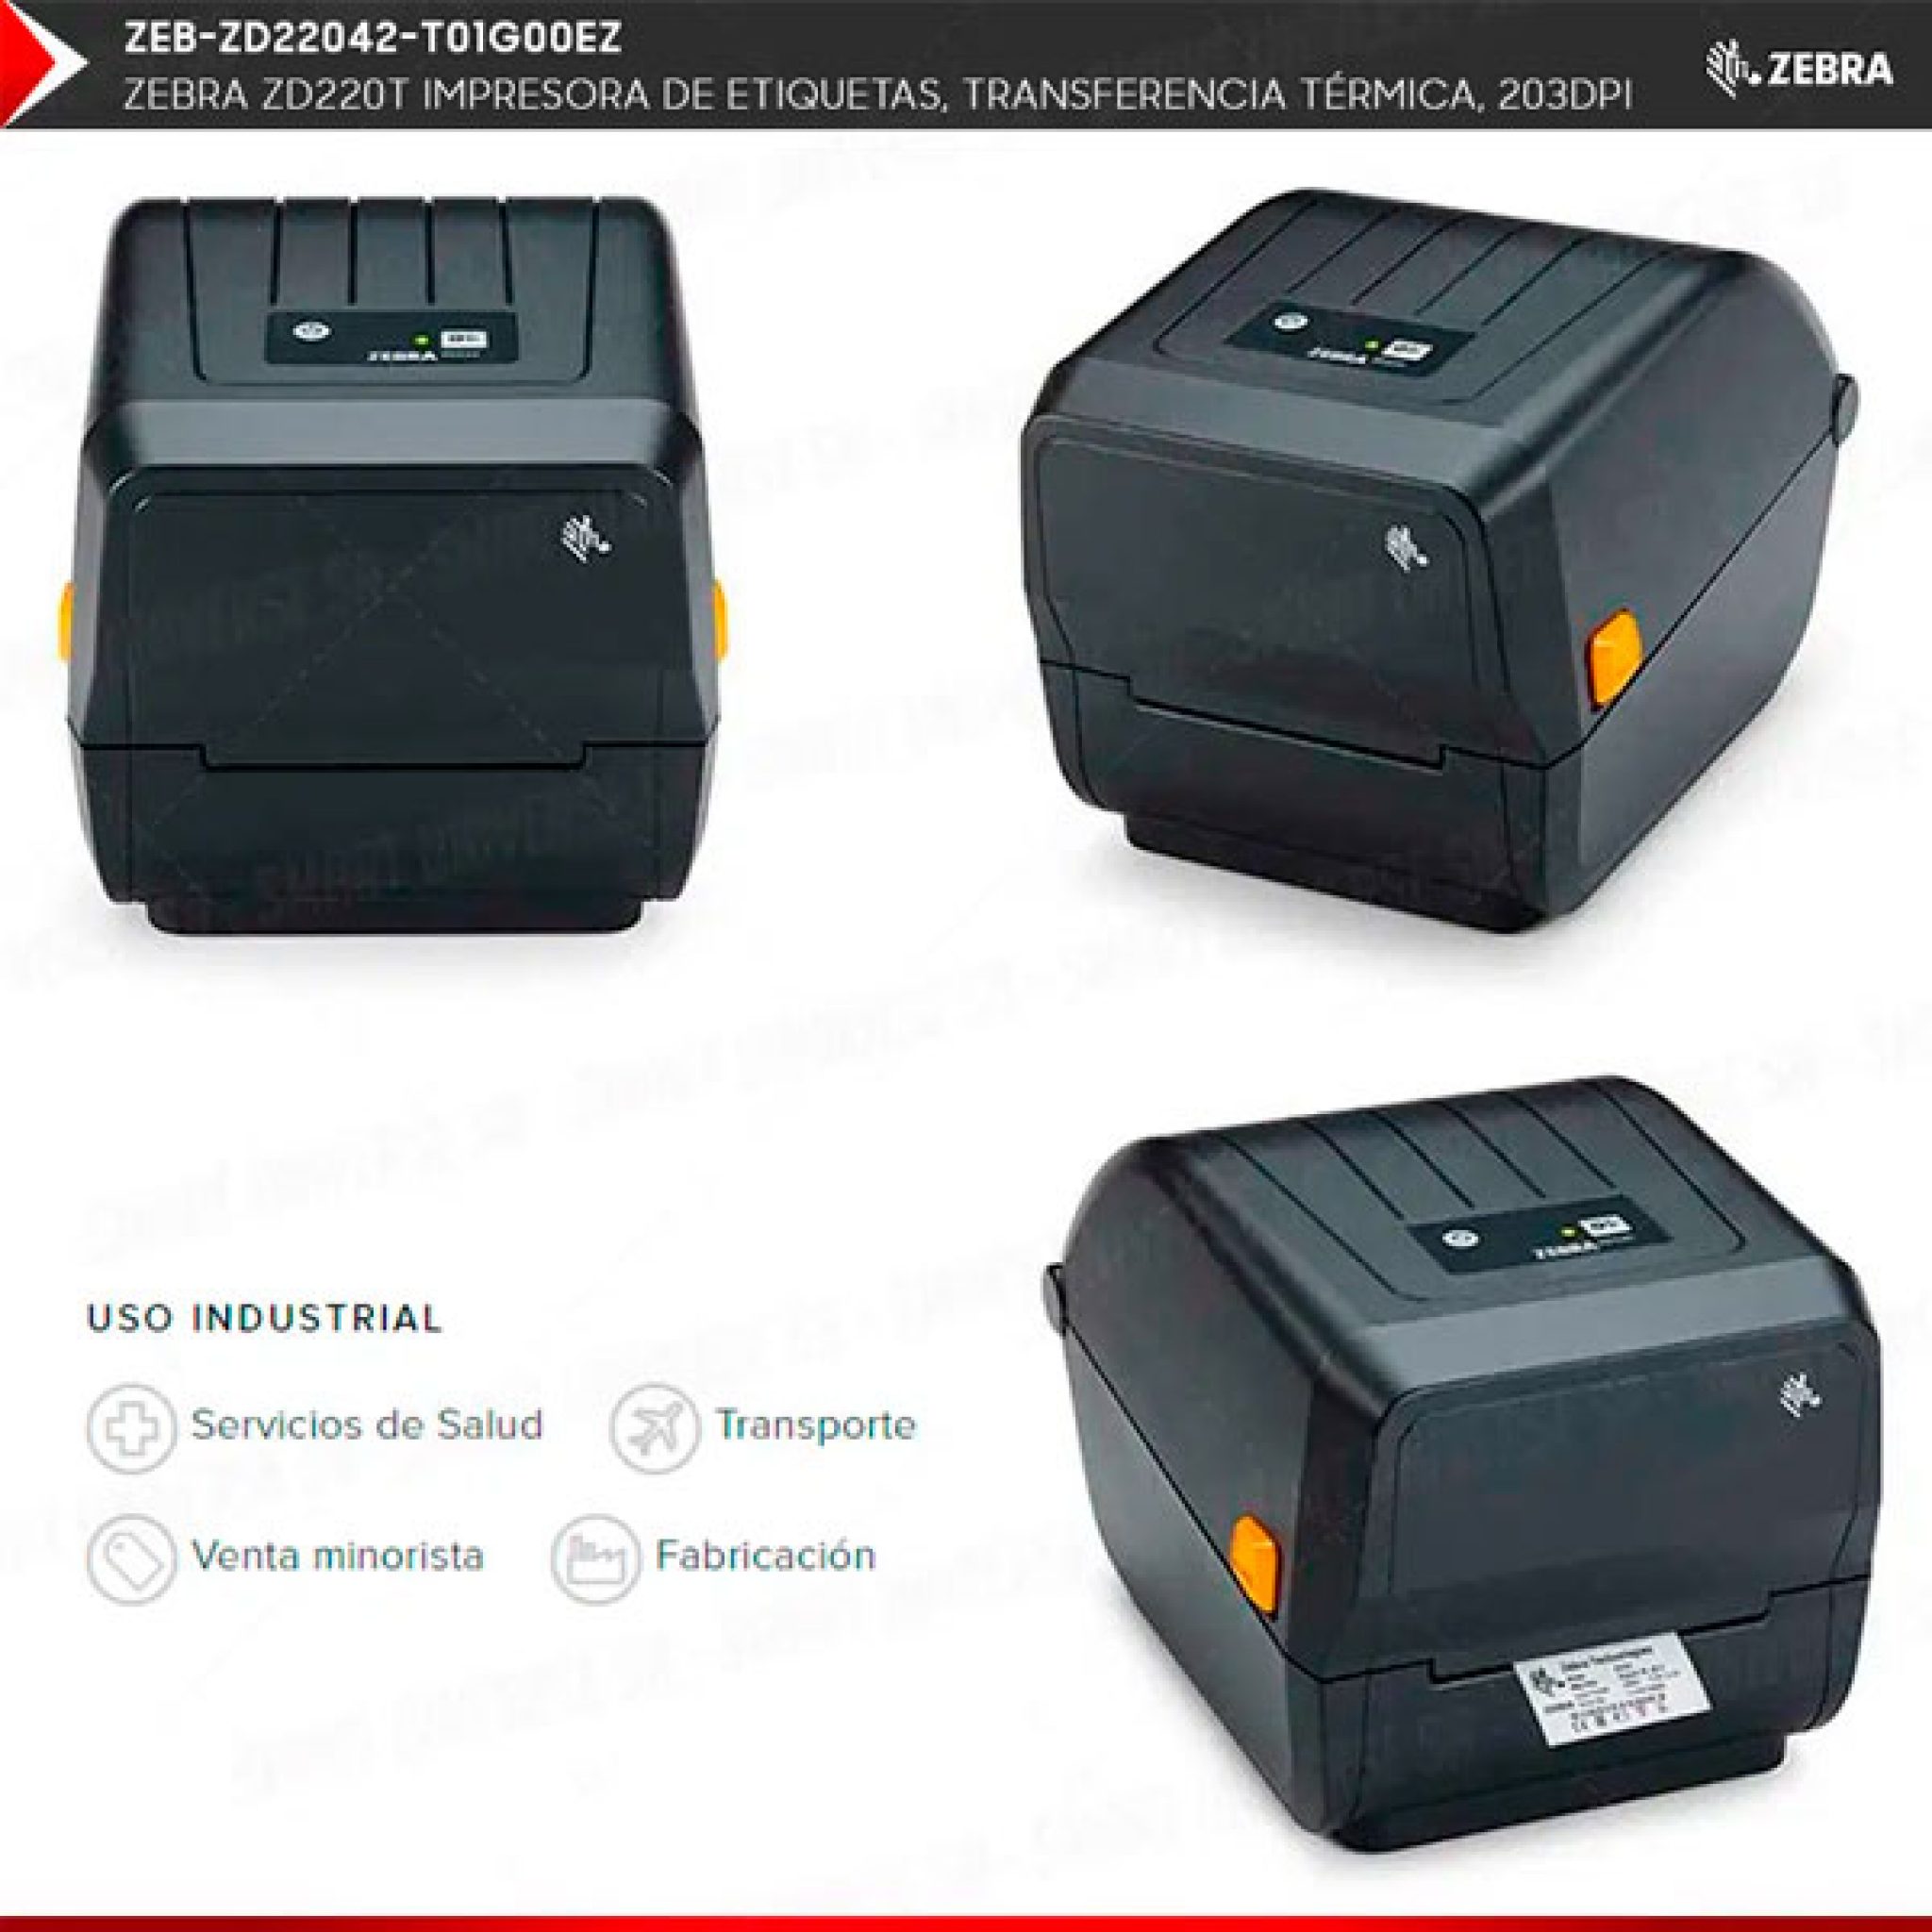 Impresora De Etiquetas Termotransferencia Zebra Zd220t Usb Smart Universe Sa 0900